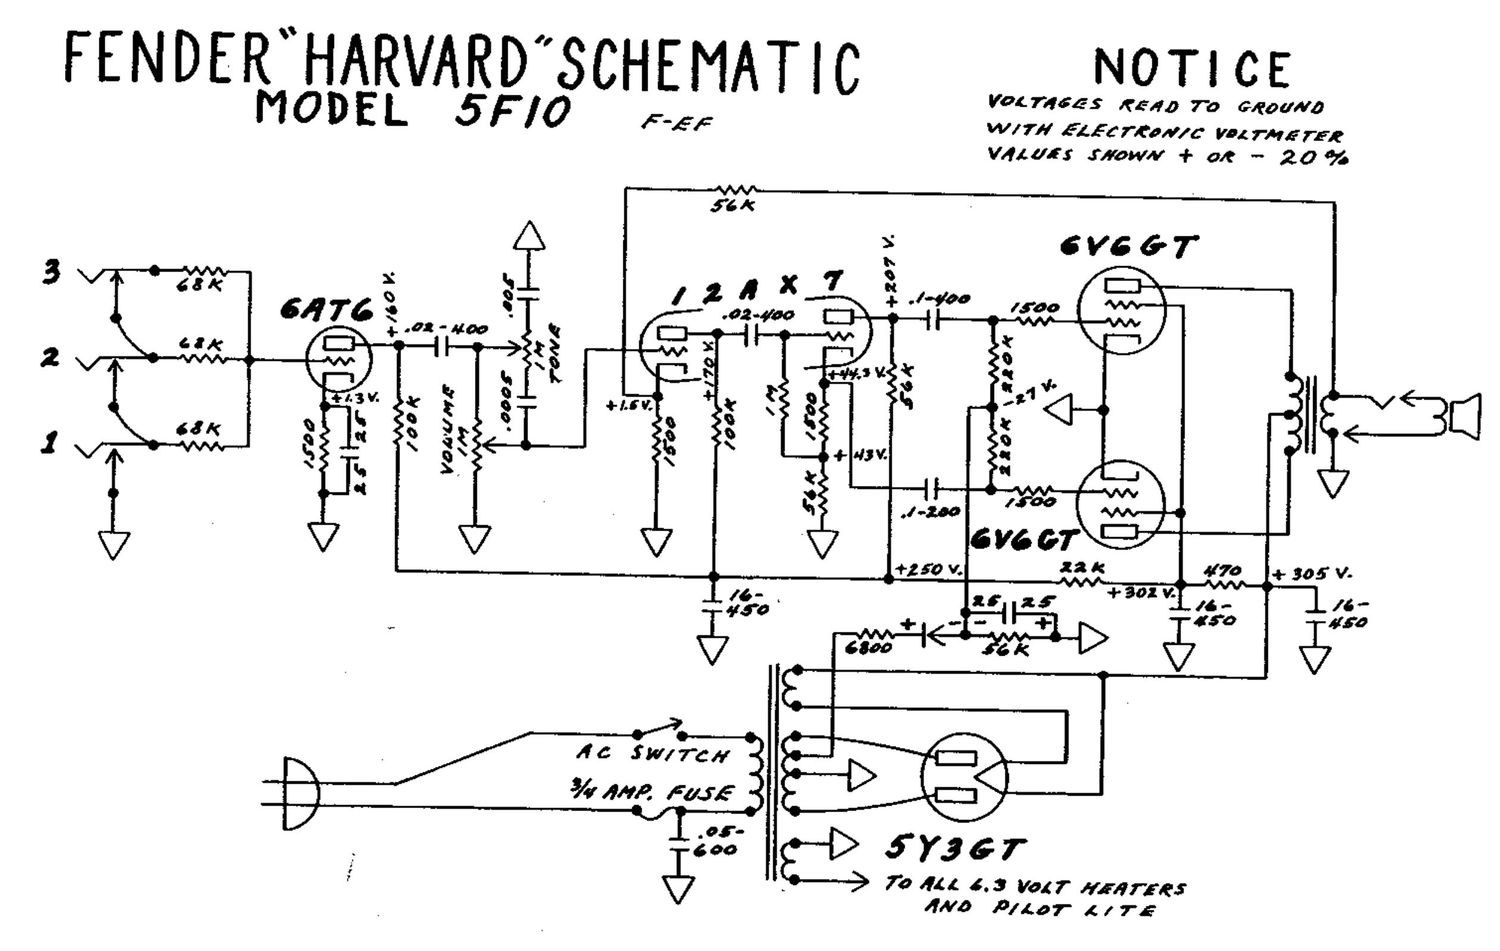 fender harvard 5f10 schematic